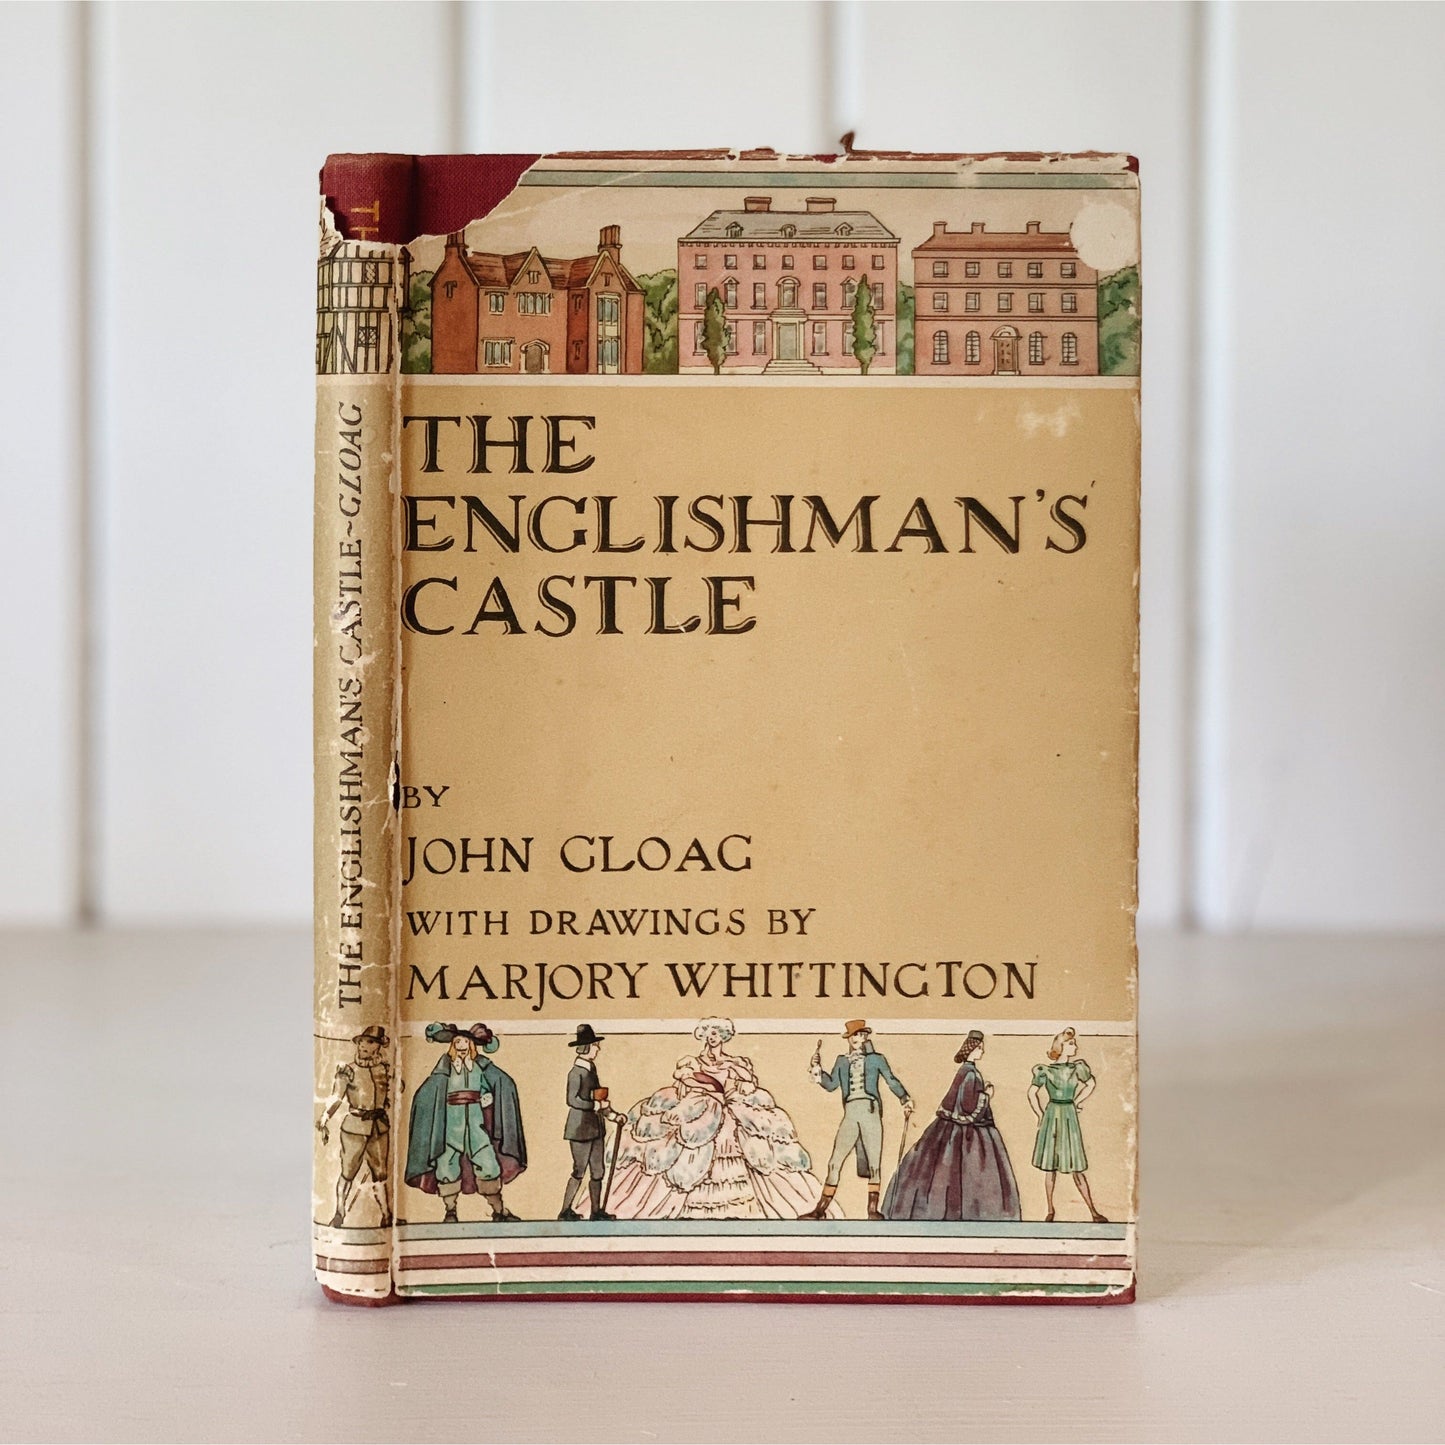 The Englishman's Castle: A History of Houses, John Gloag, 1945, Illustrated